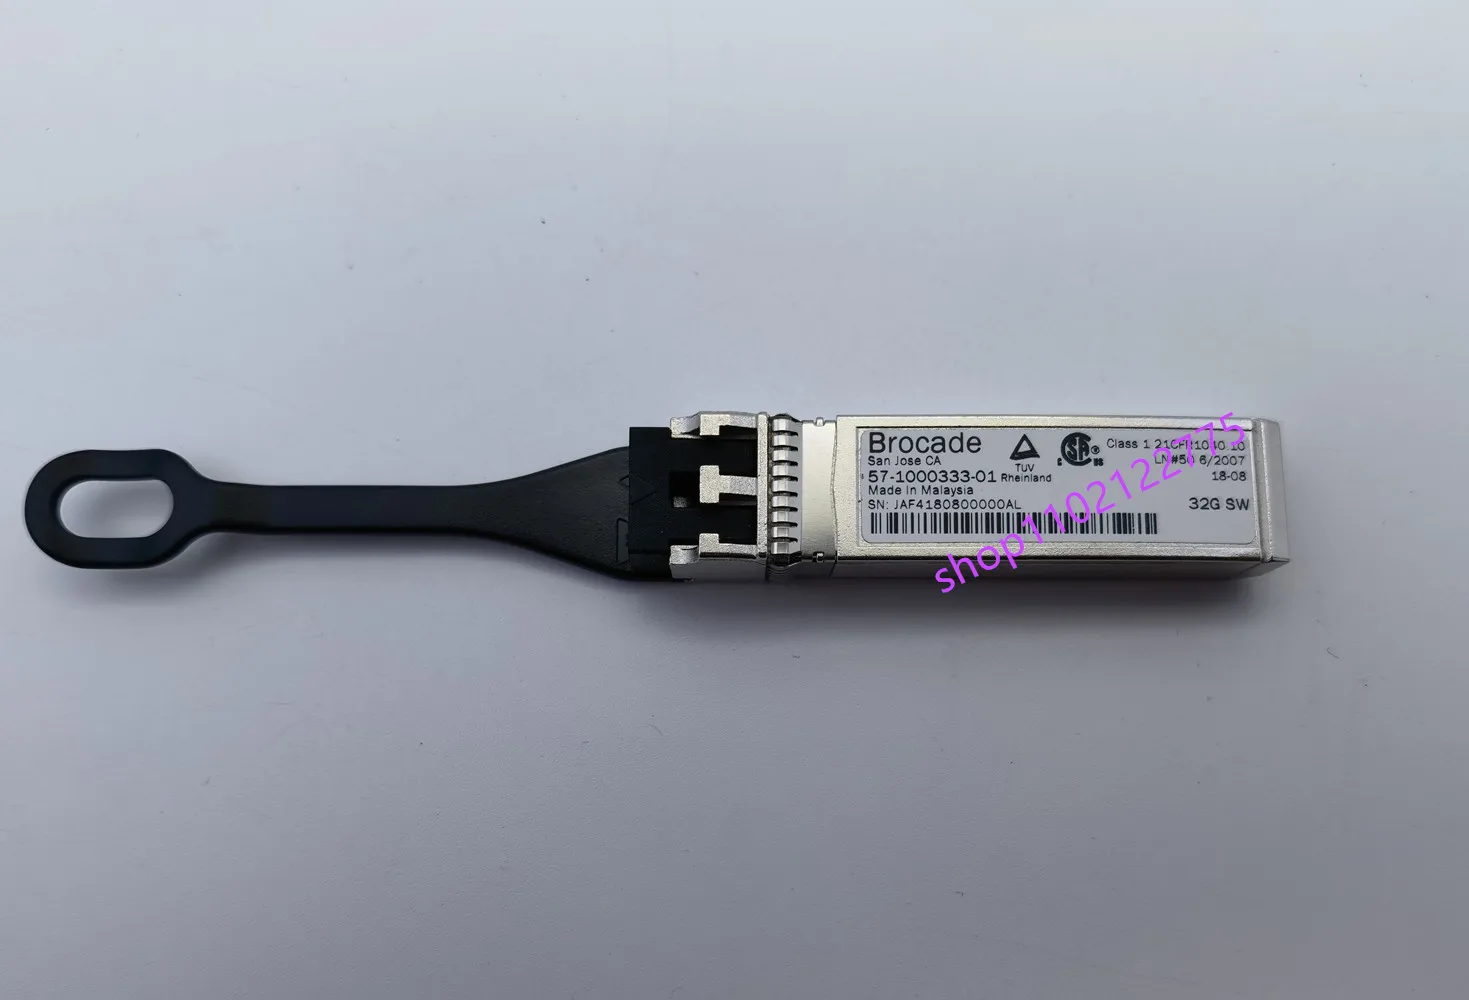 Brocade 32g sfp 57-1000333-01 XBR-000212 SFP+ 32G SW 850nm 100m Used in FC32-64/G630/G620/X6-4/X6-8Switches Network fiber switch